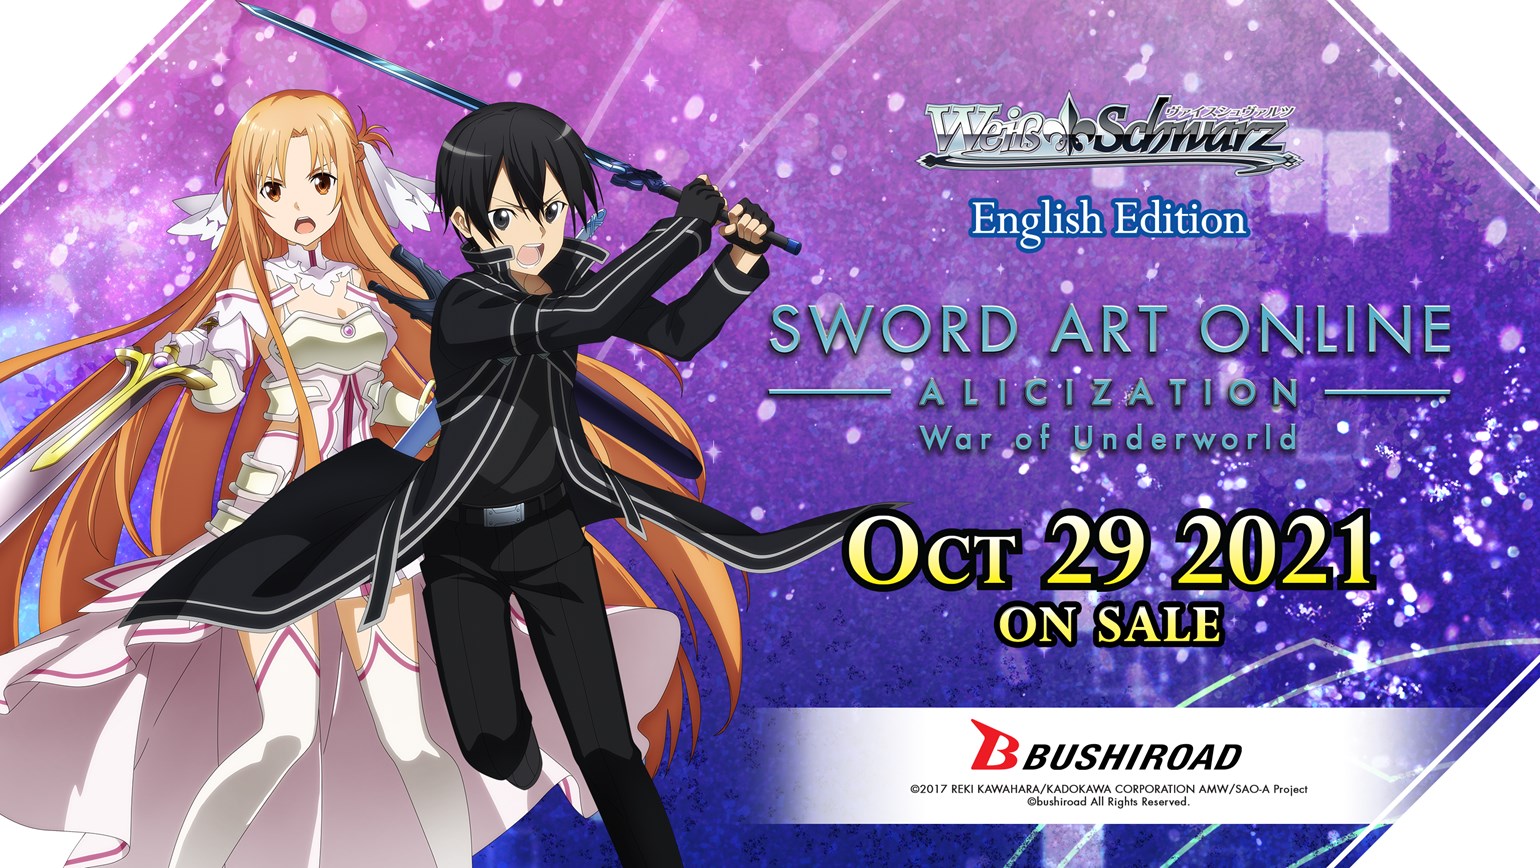 Weiss Schwarz: Sword Art Online -Alicization- Vol.2 materializes this November!